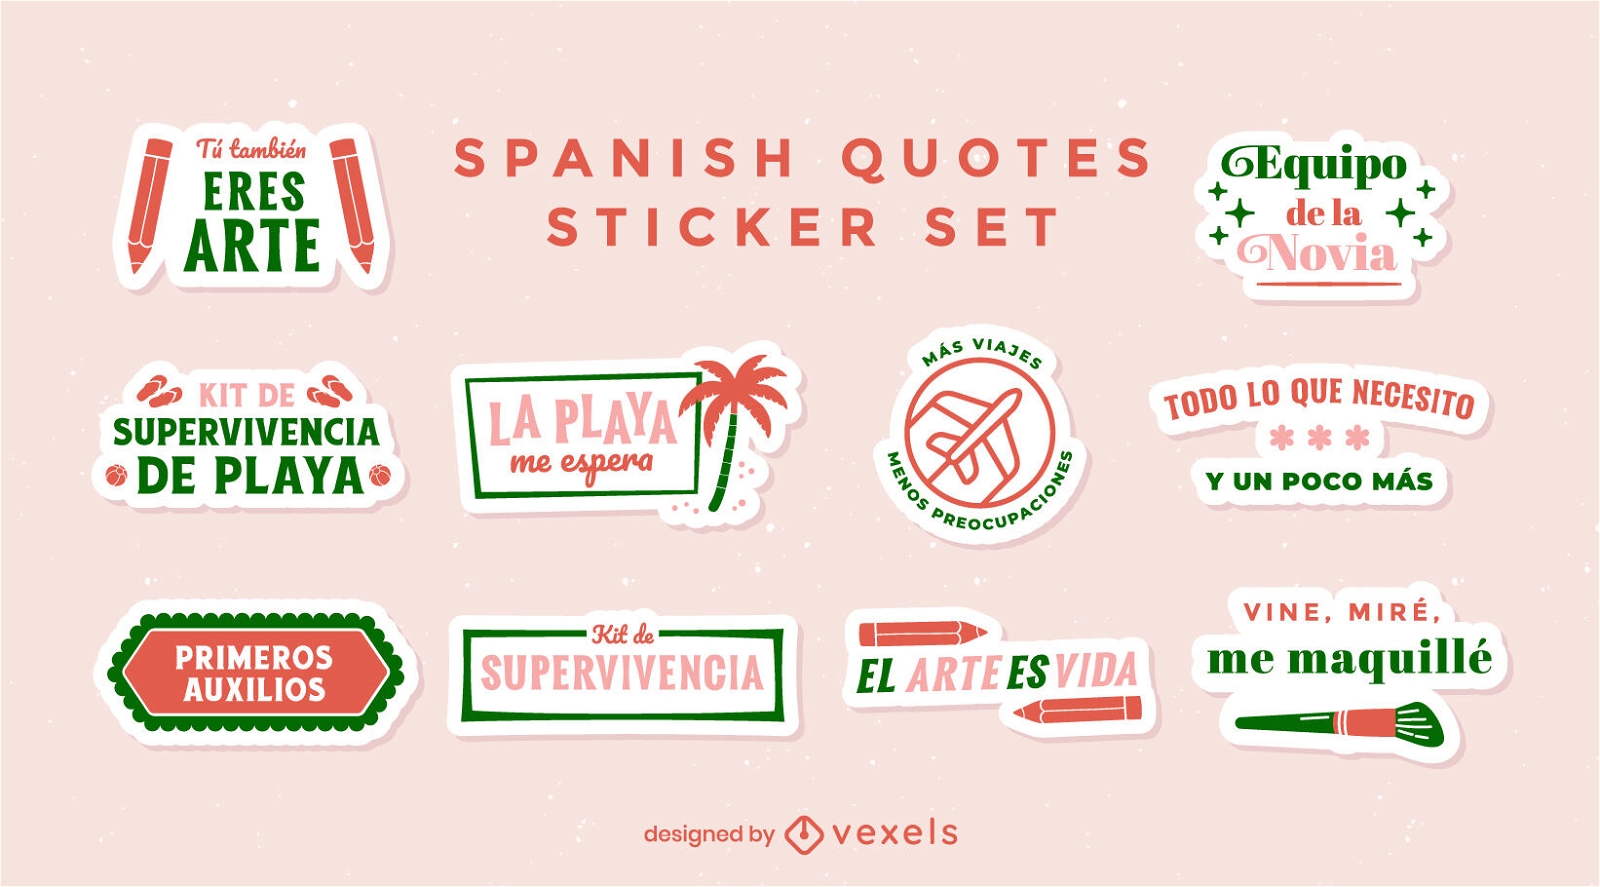 Spanish fun quotes sticker set